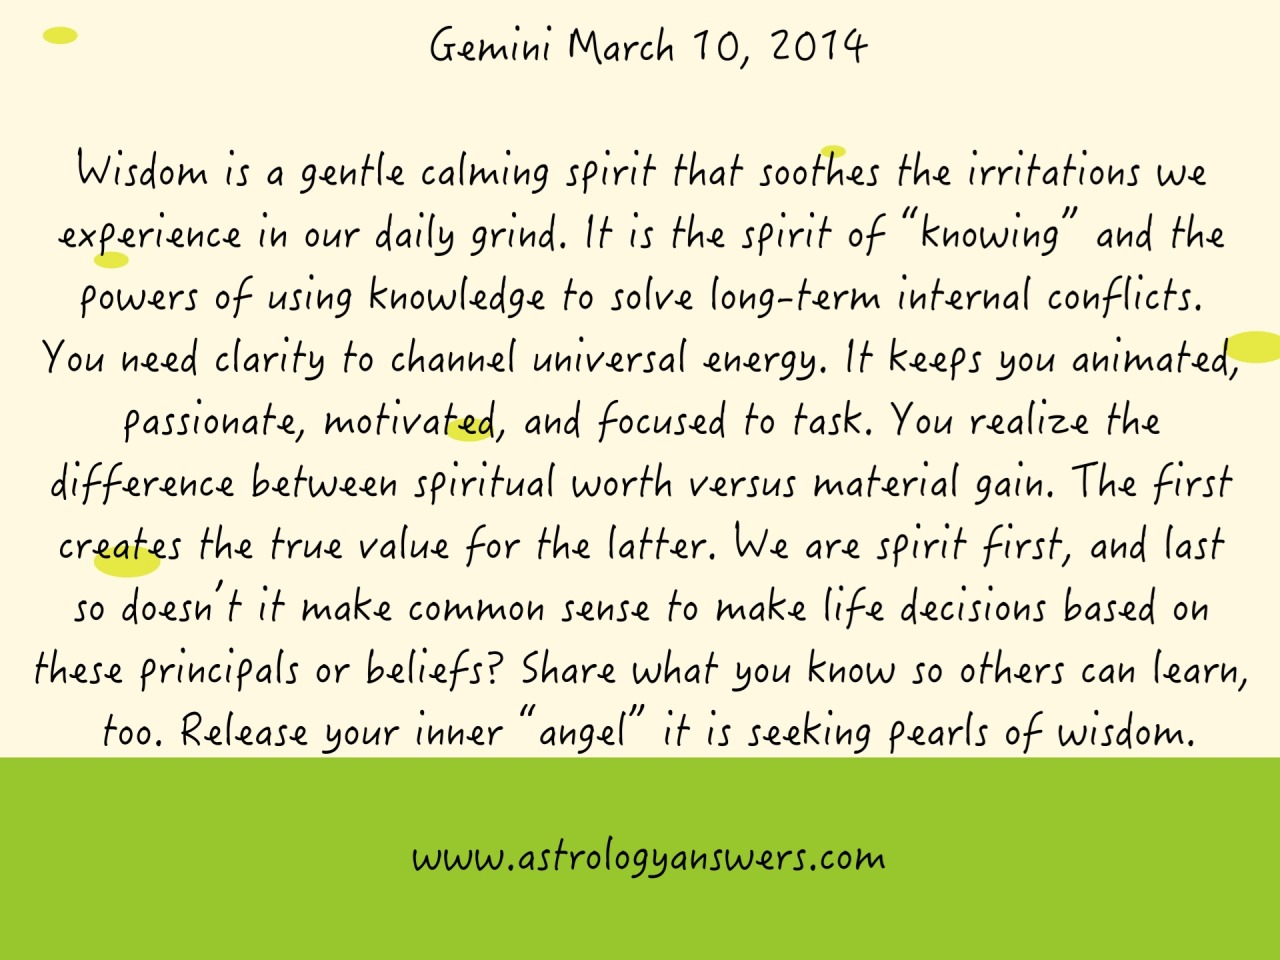 gemini daily horoscope ask ganesha